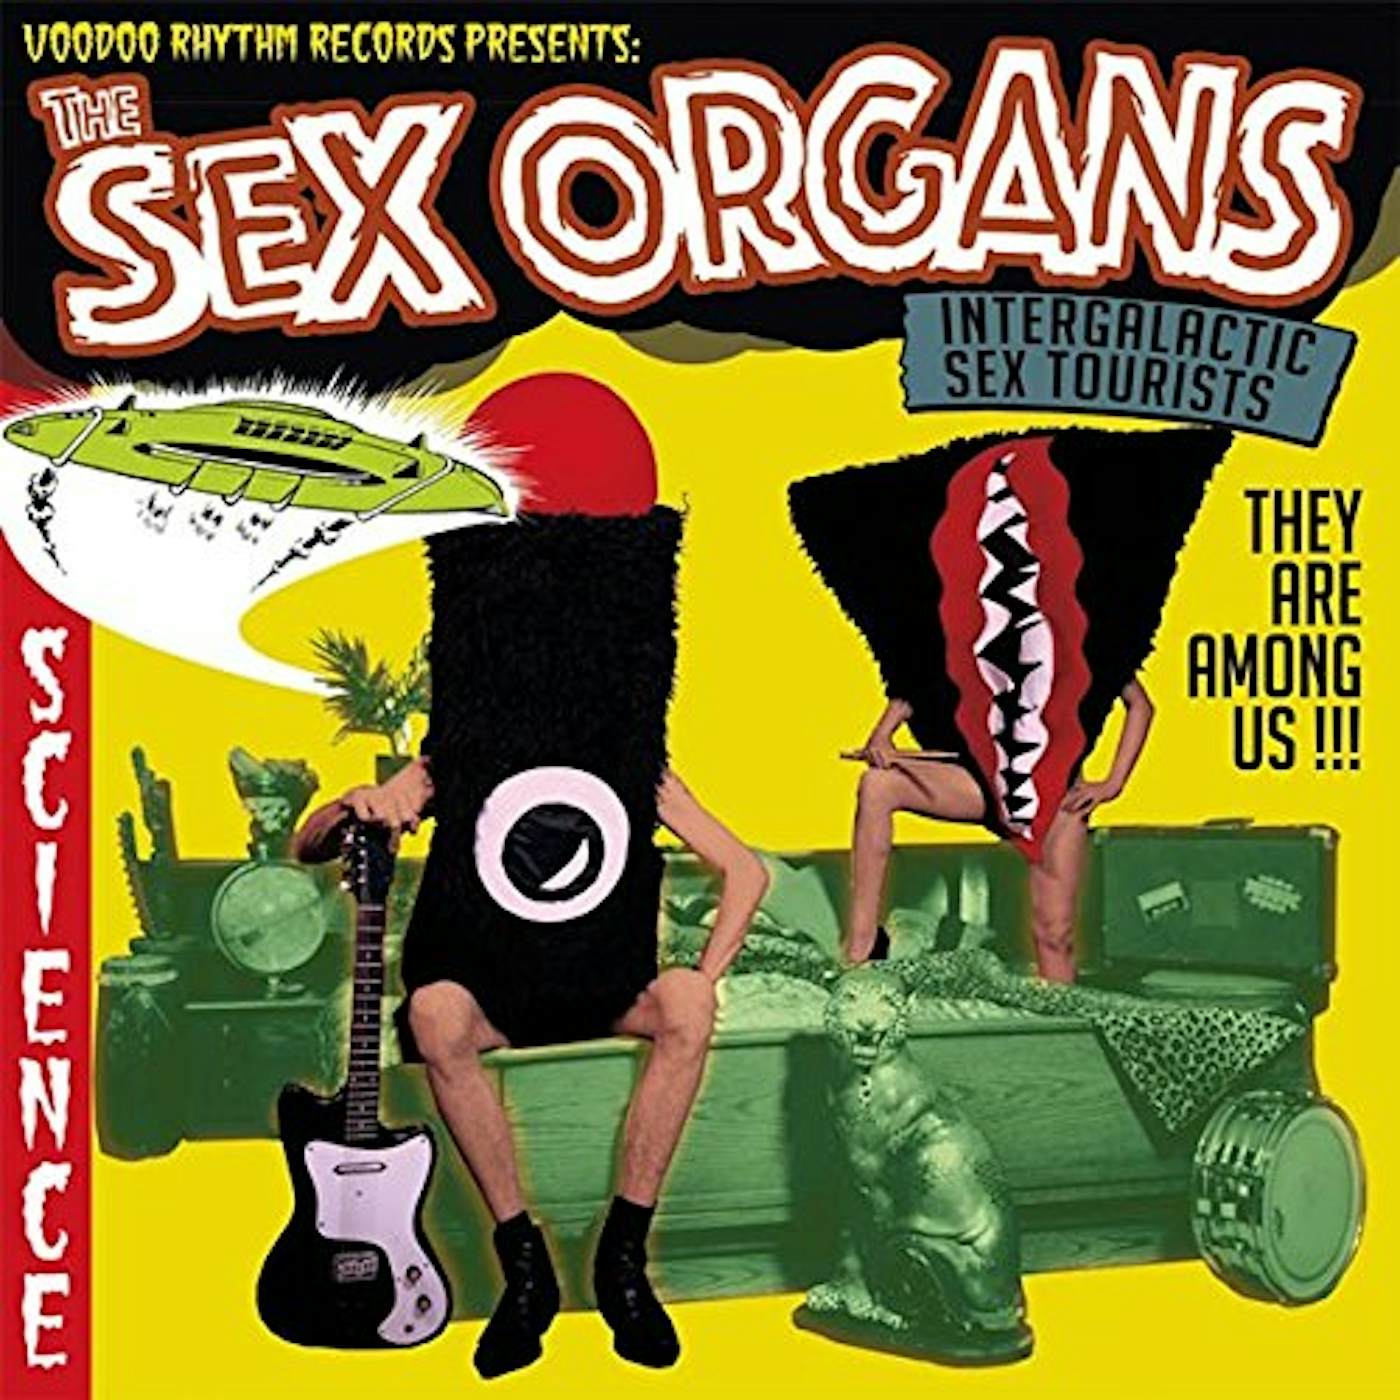 The Sex Organs INTERGALACTIC SEX TOURIST CD